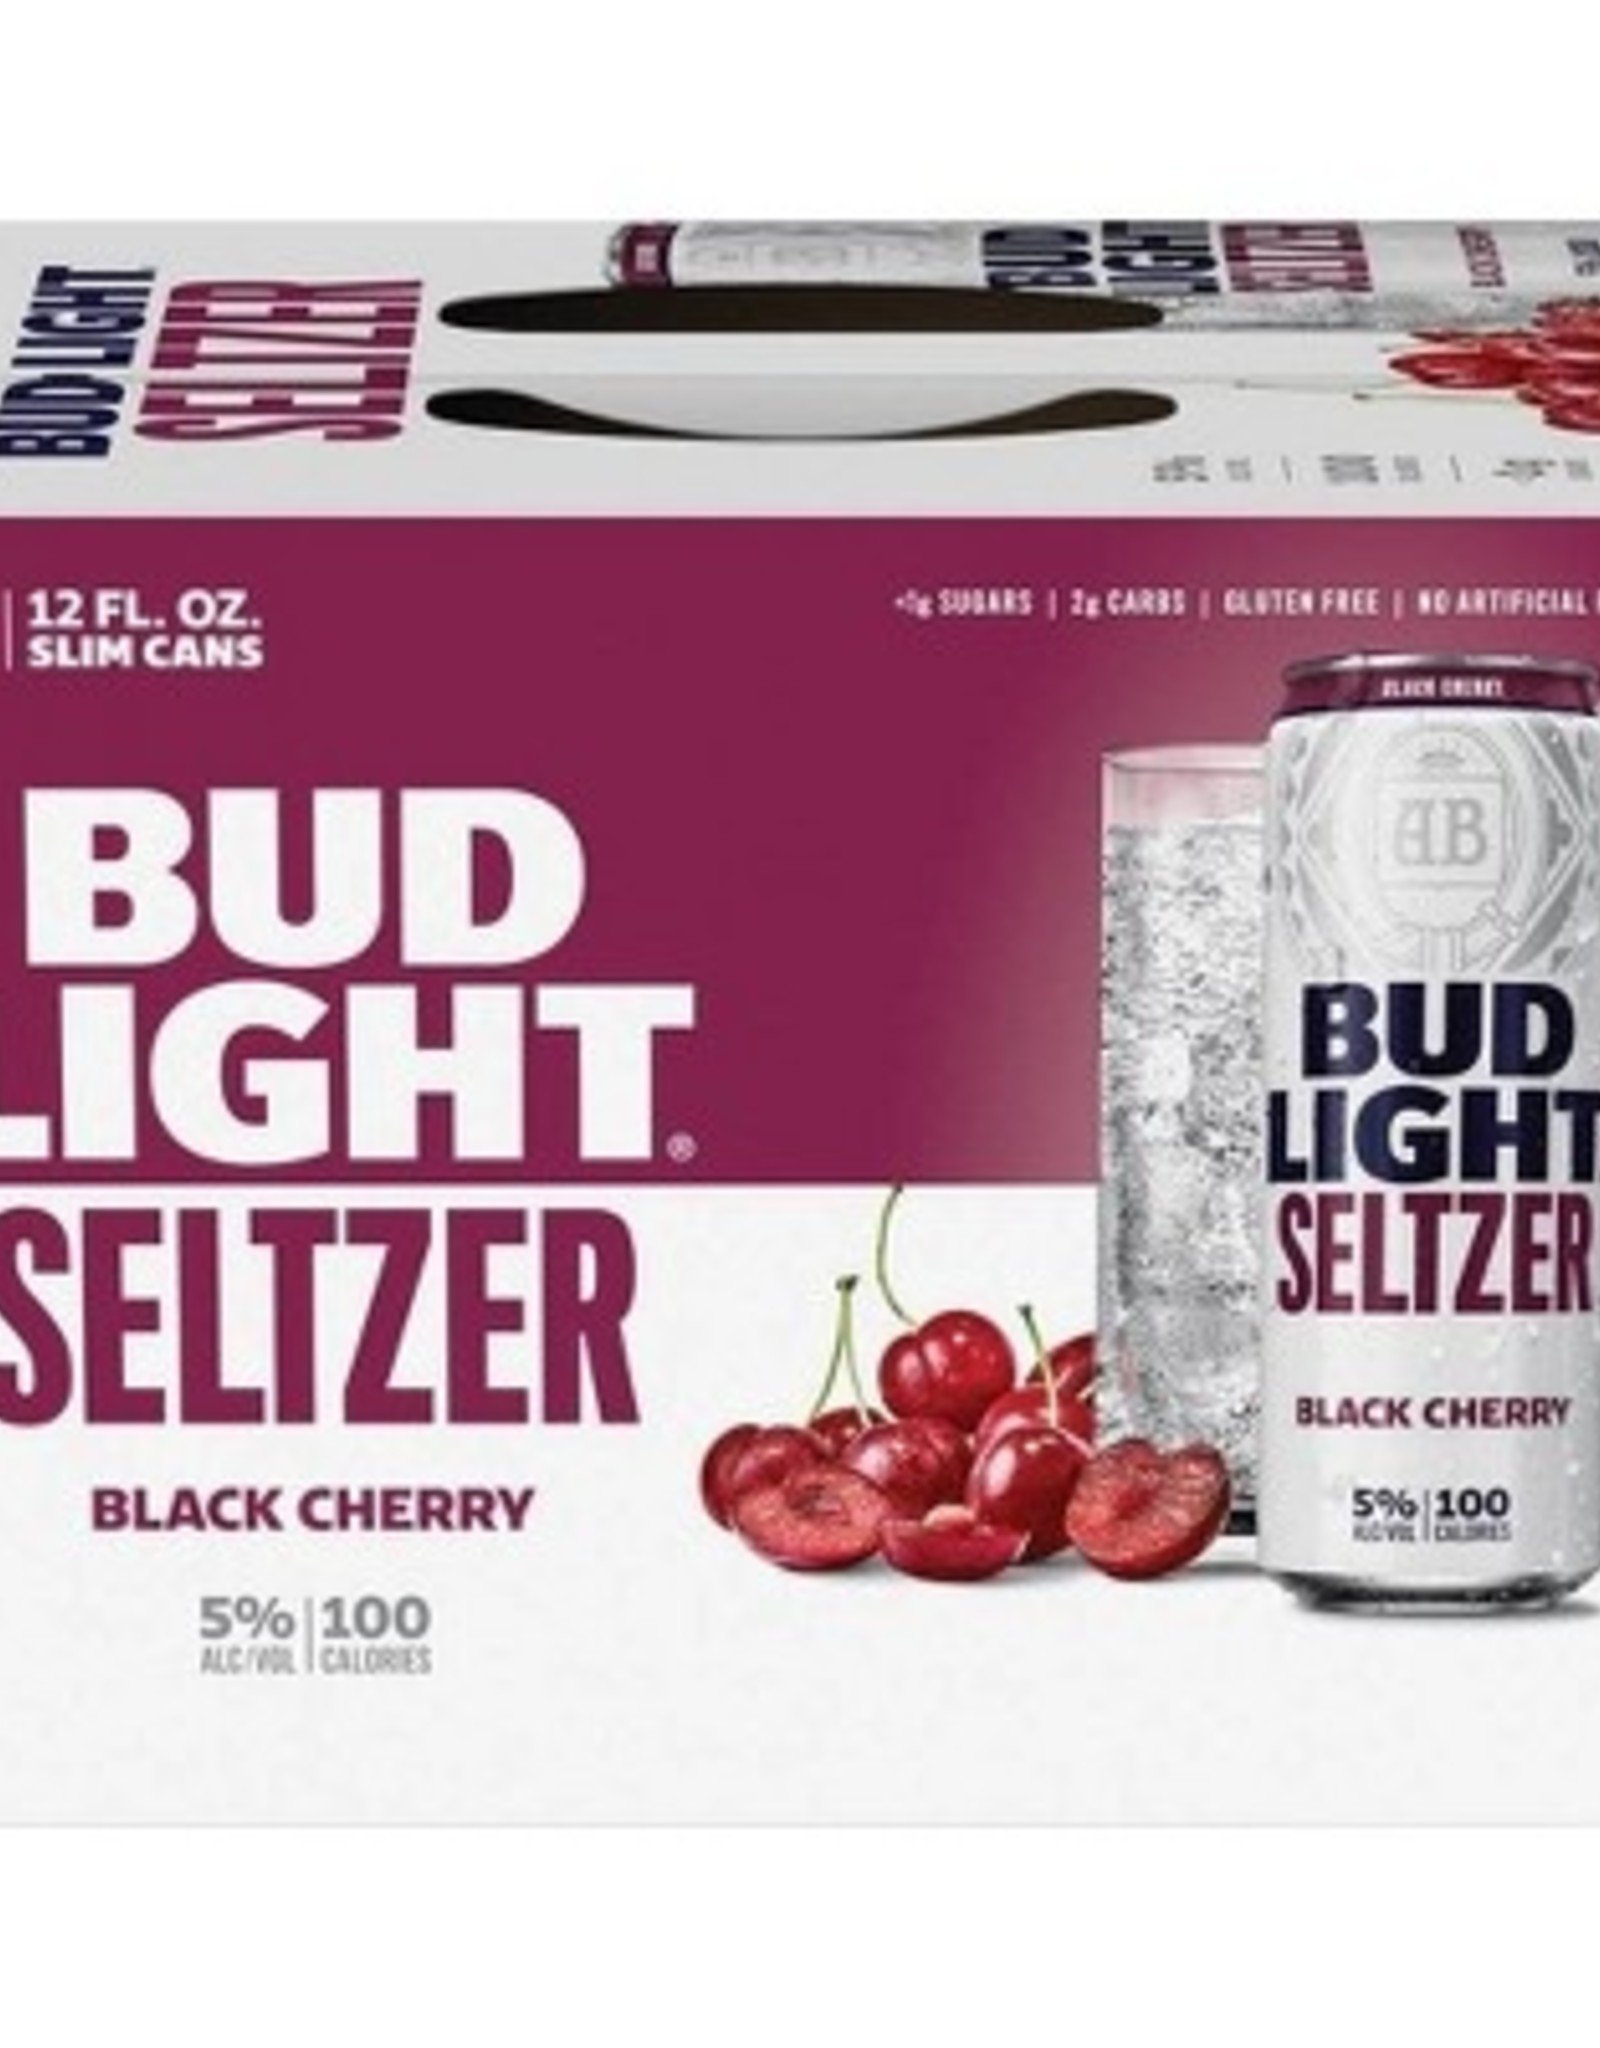 Bud Light Seltzer Black Cherry 12x12 oz slim cans